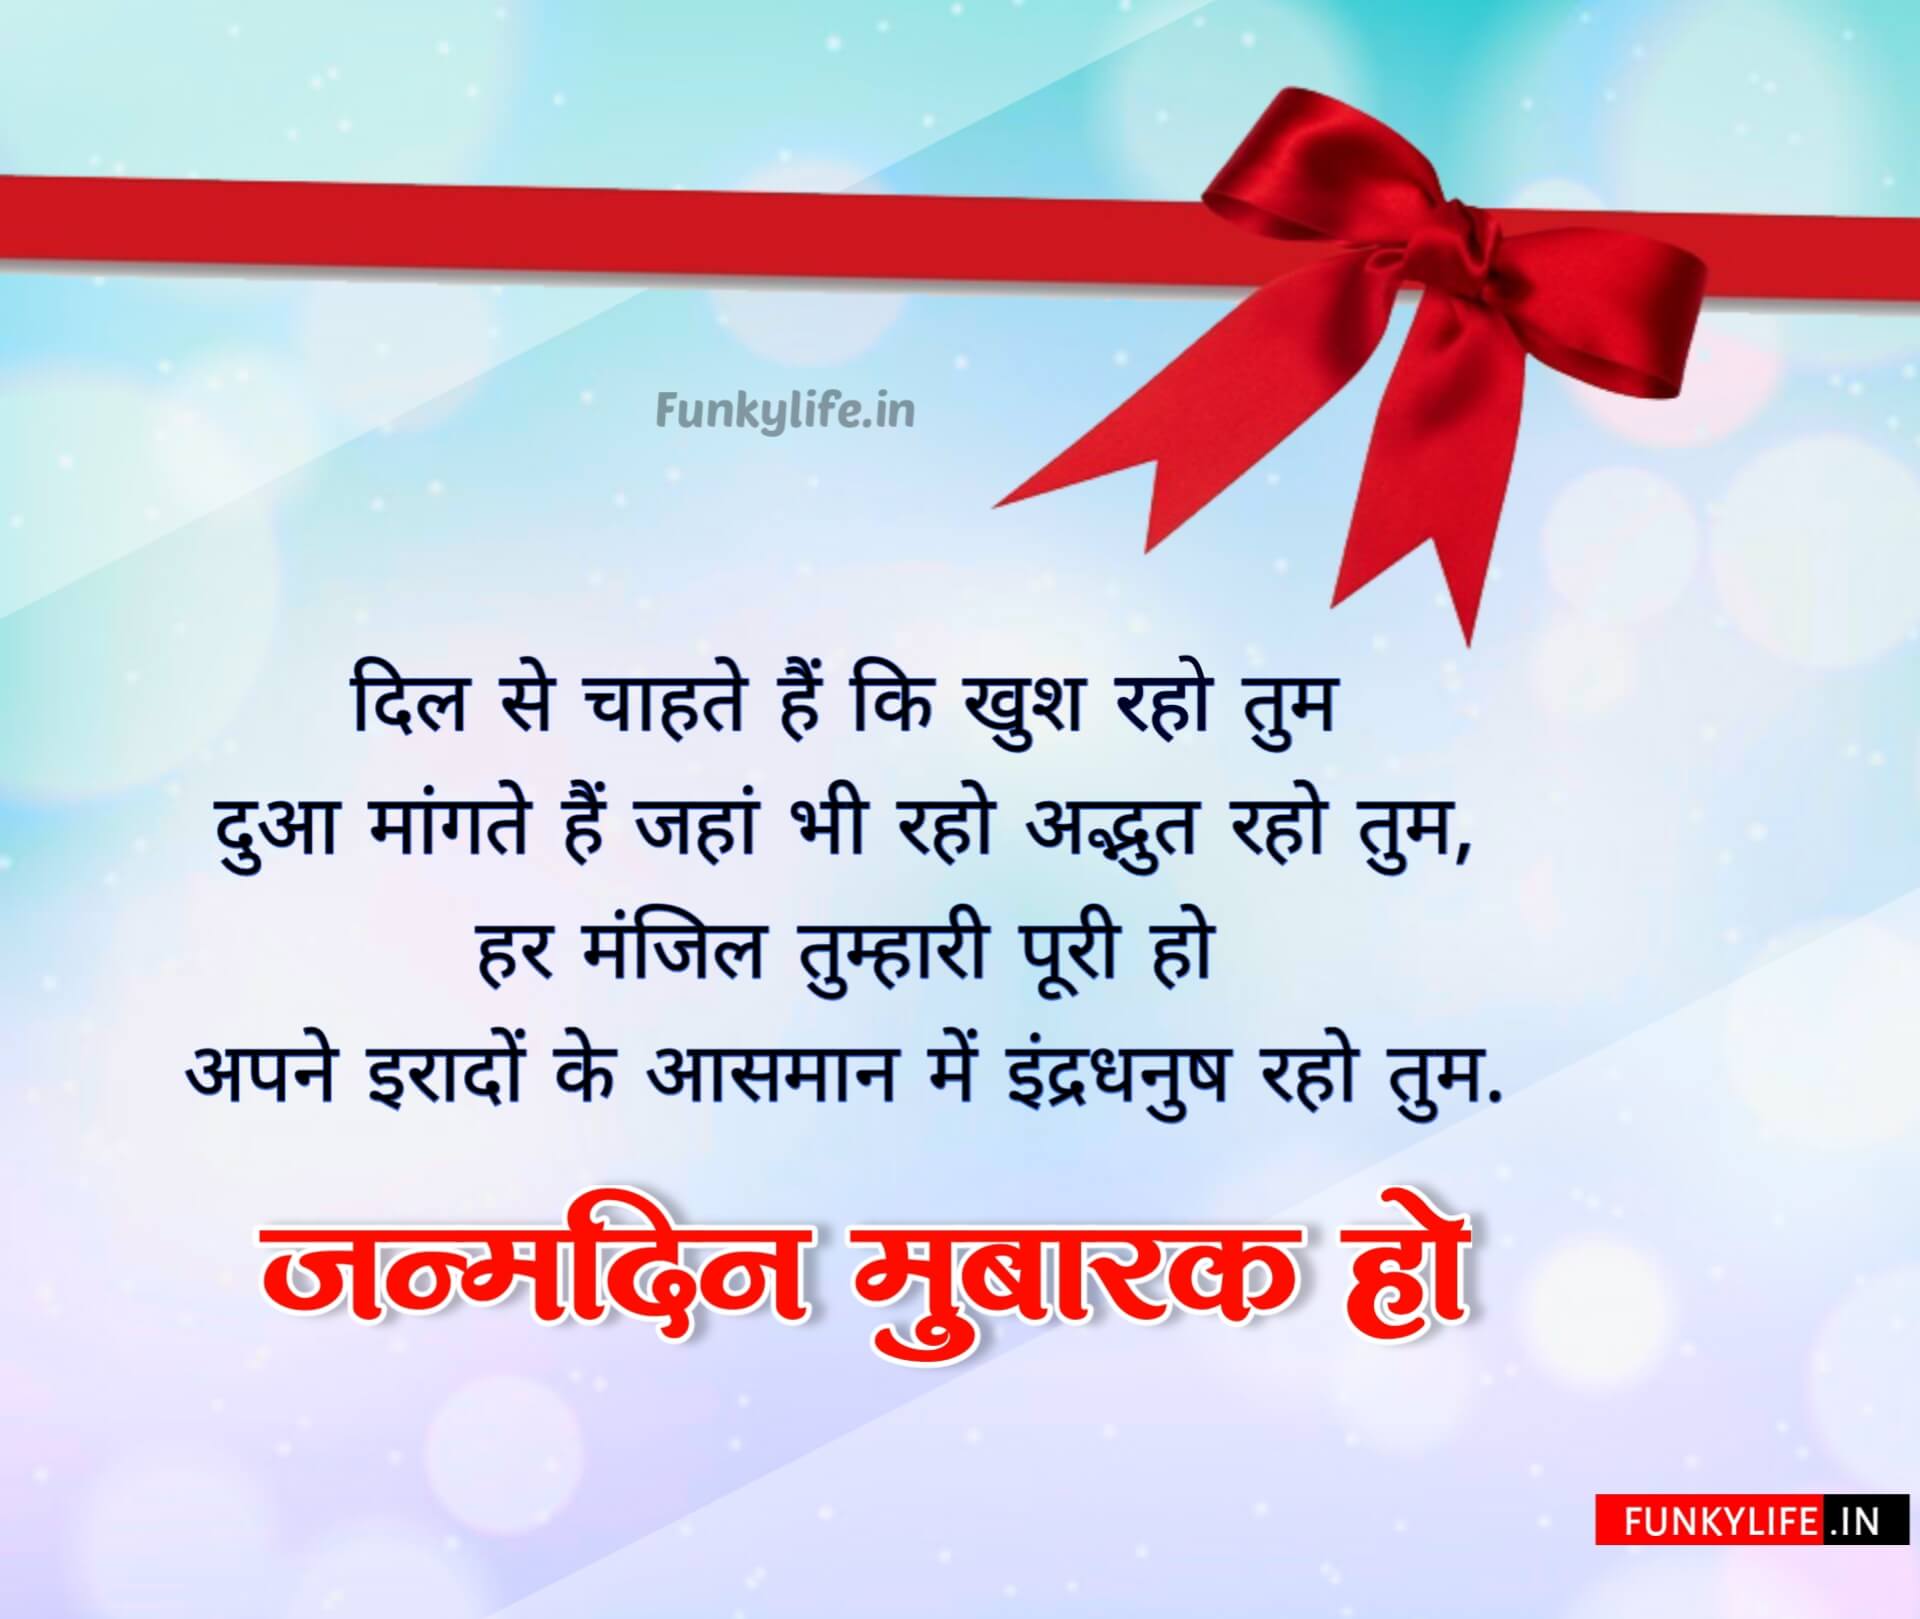 Happy birthday wishes in hindi